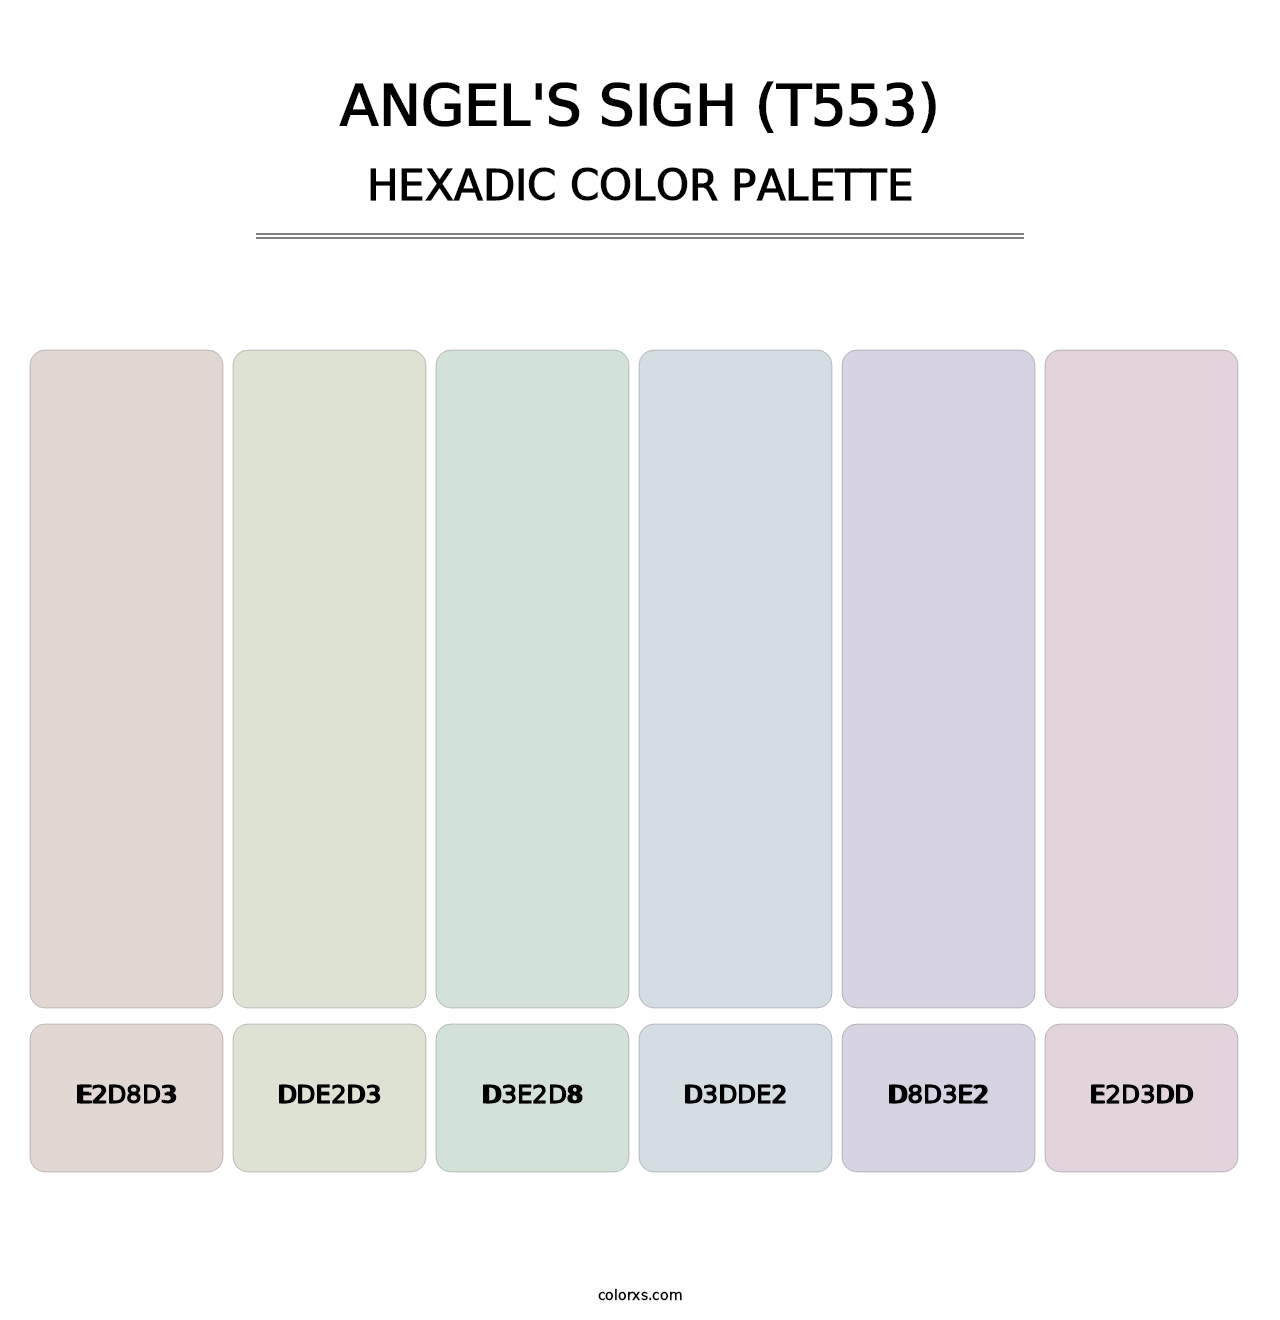 Angel's Sigh (T553) - Hexadic Color Palette